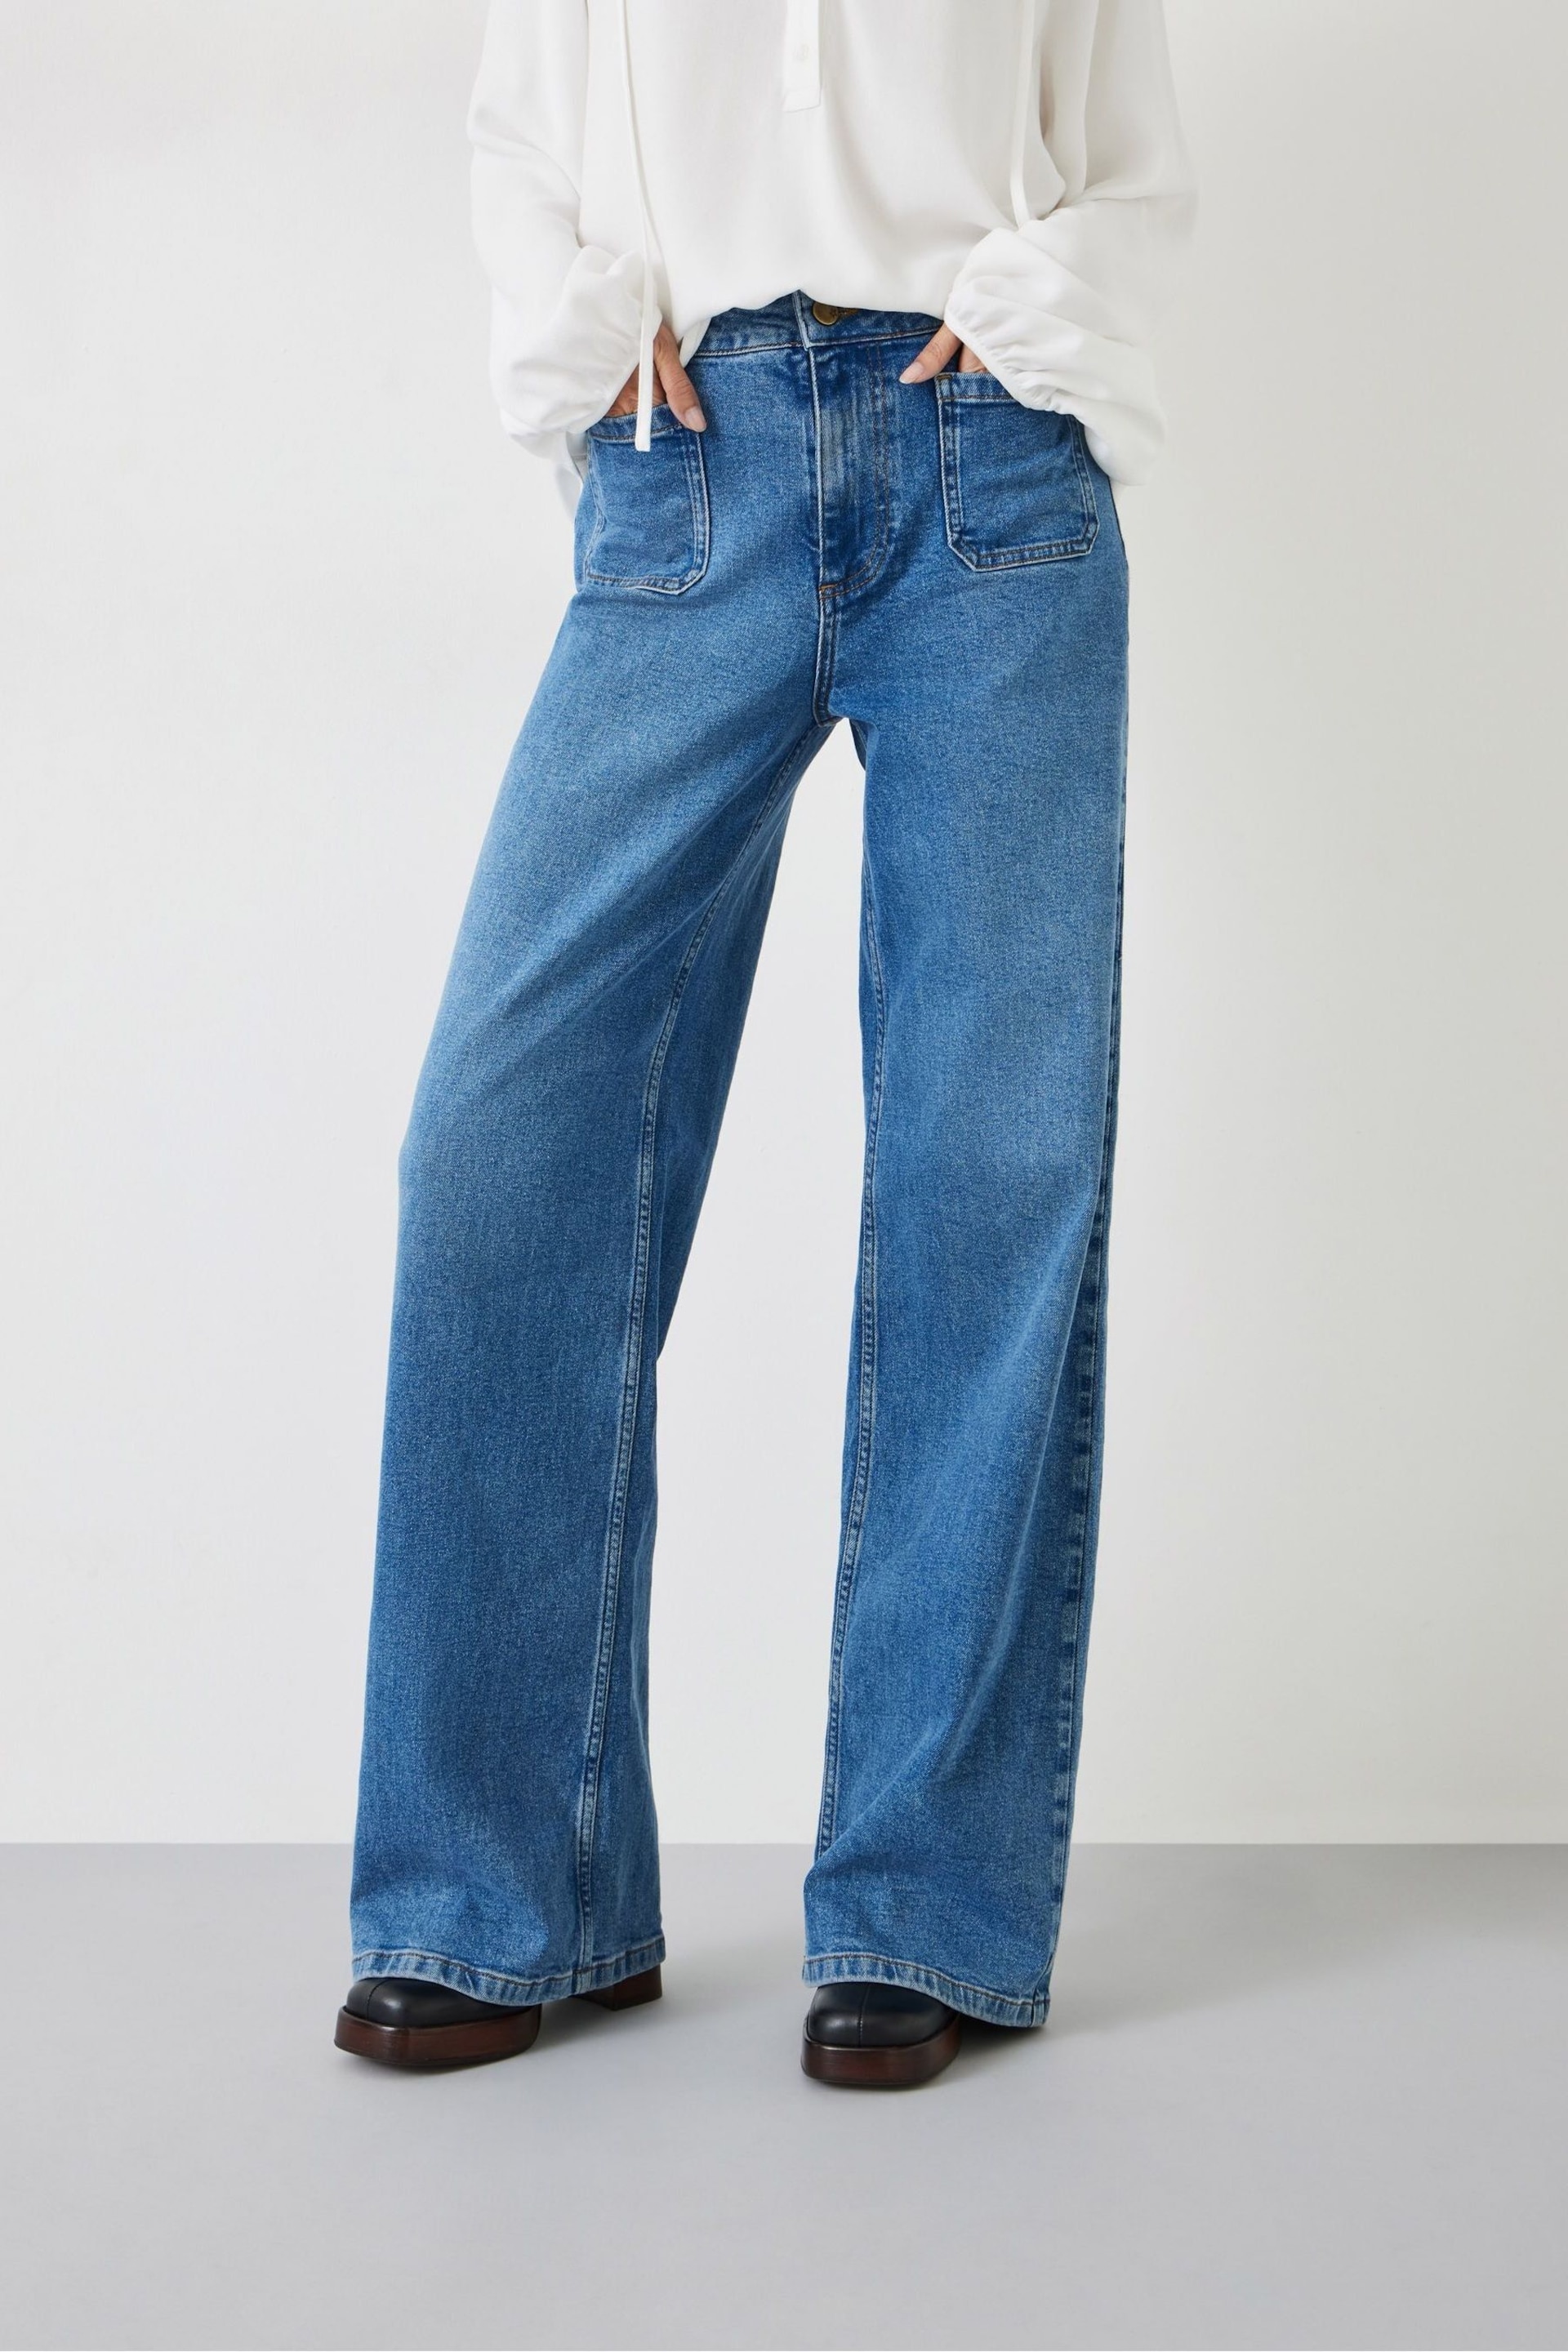 Hush Blue Rowan Flared Jeans - Image 1 of 5